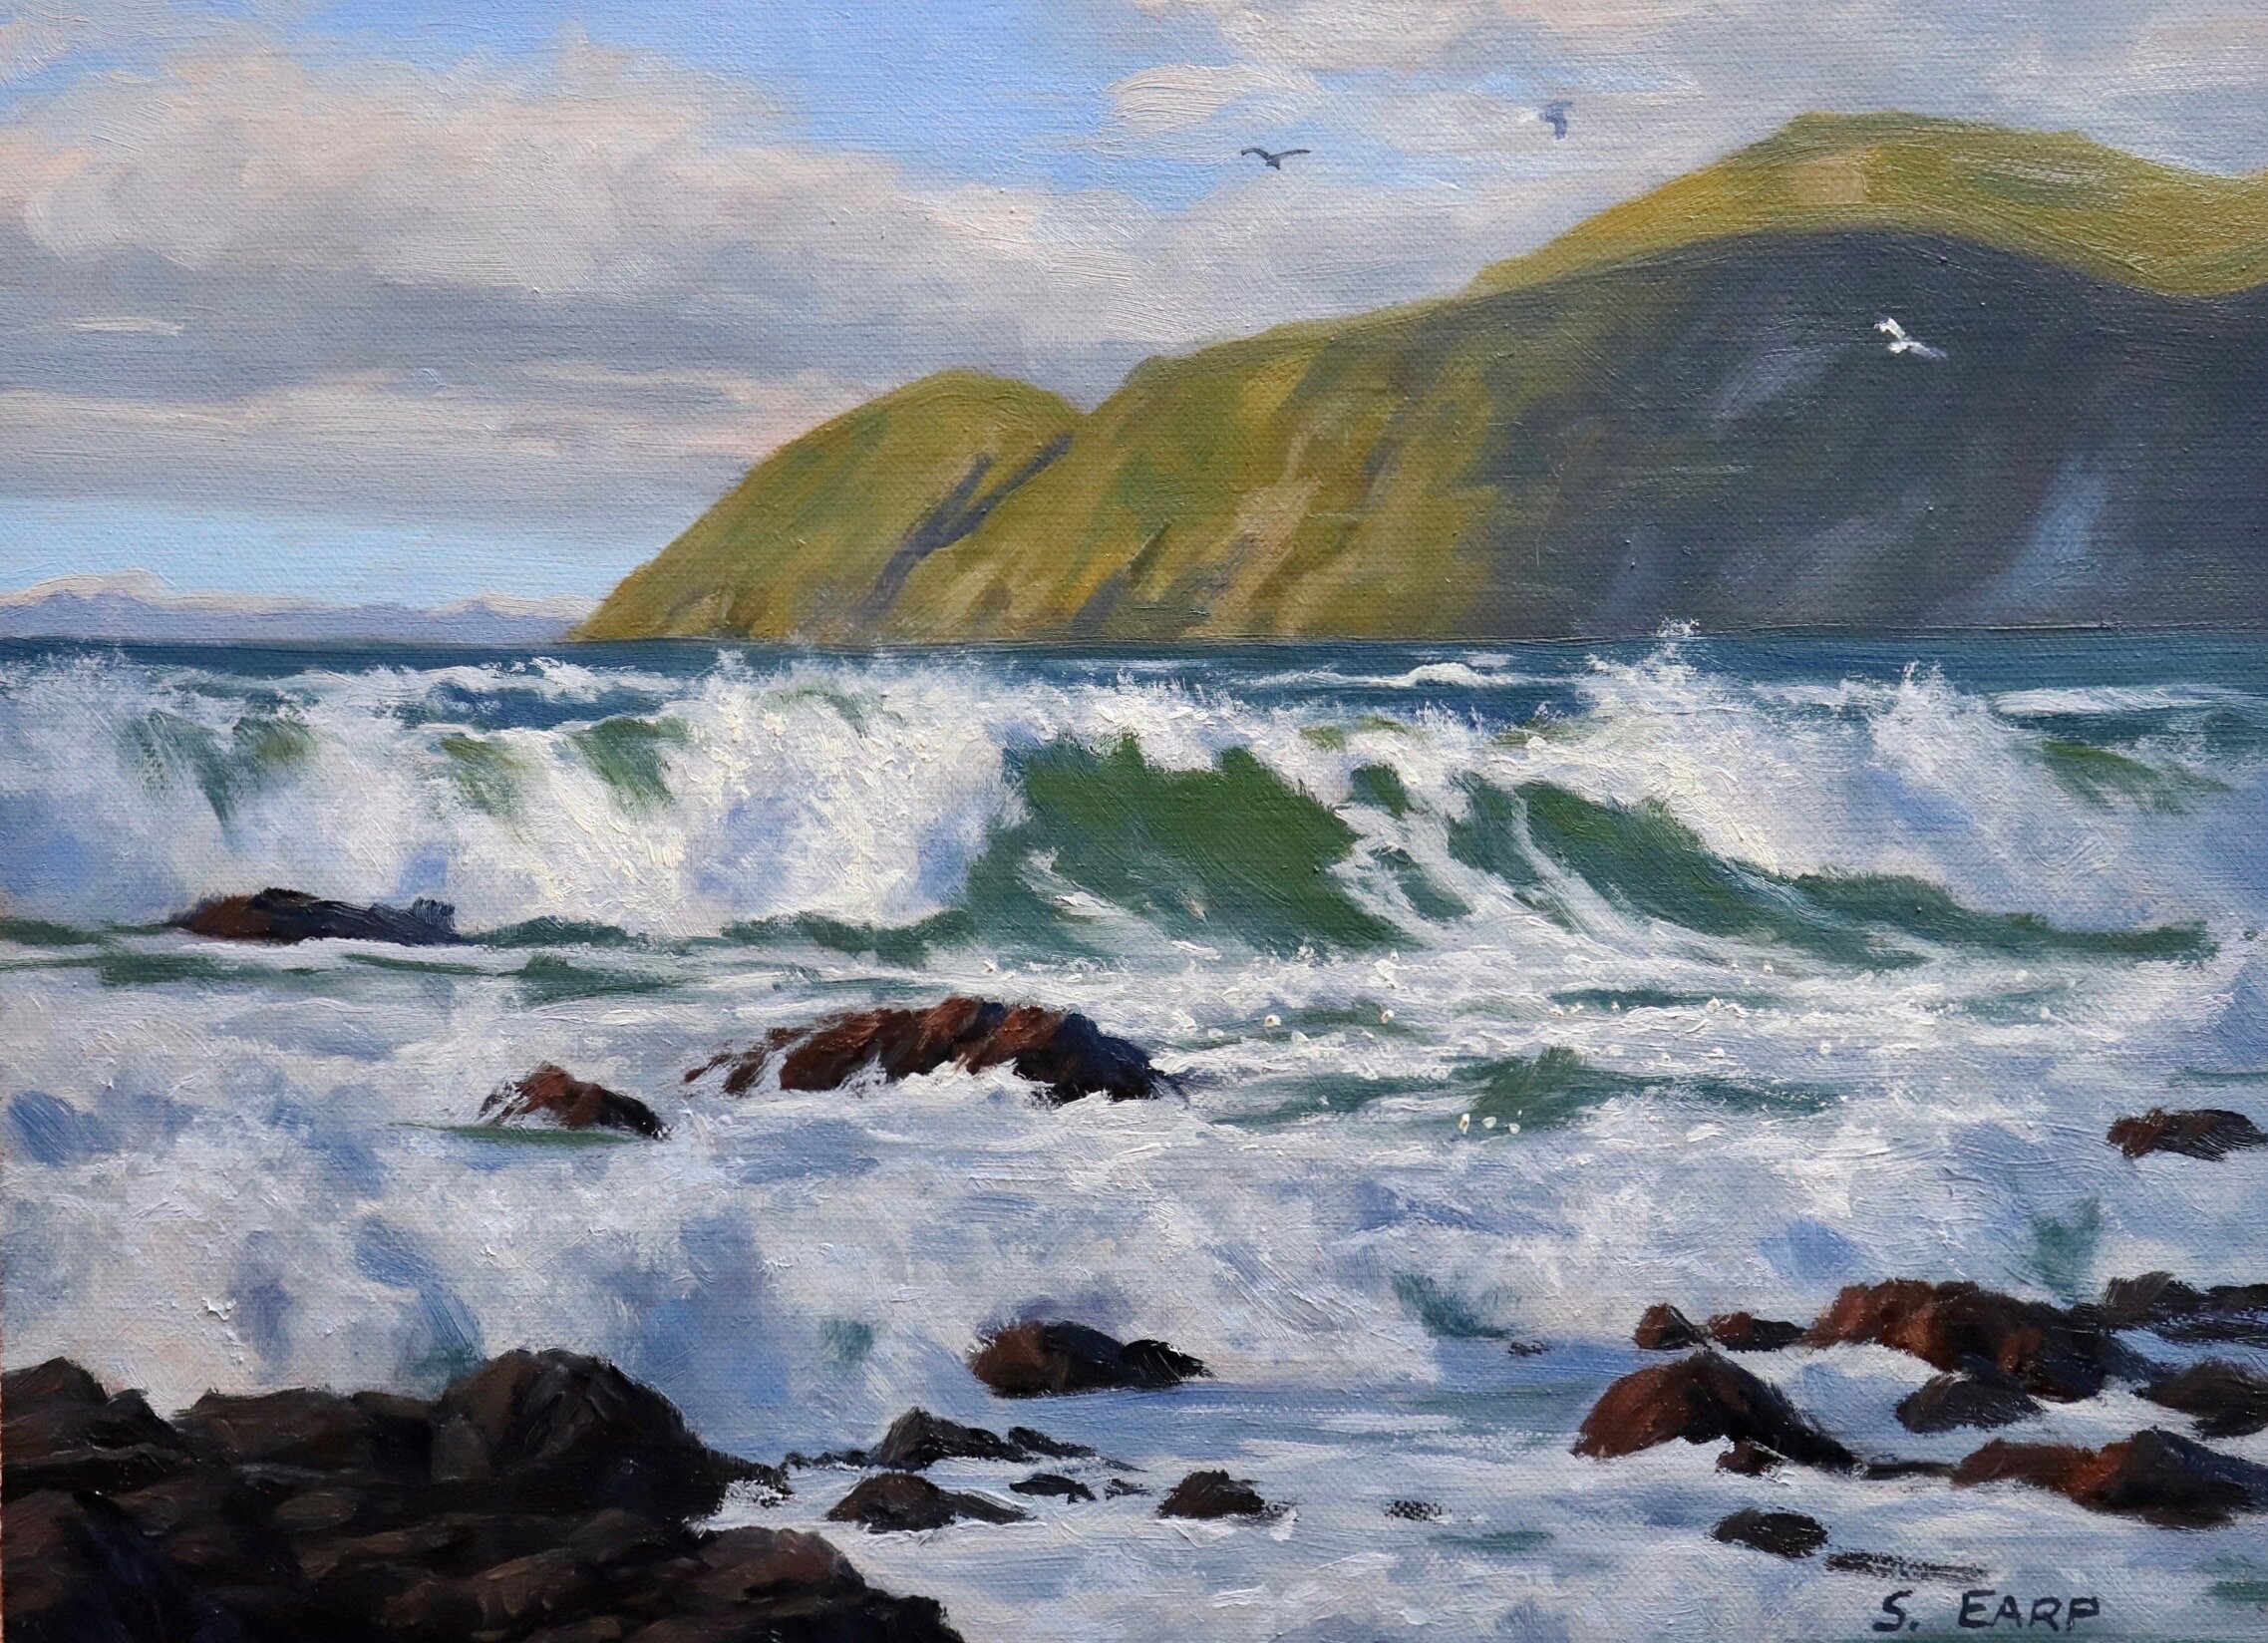 Owhiro Bay - oil painting - Samuel Earp - seascape artist.jpeg